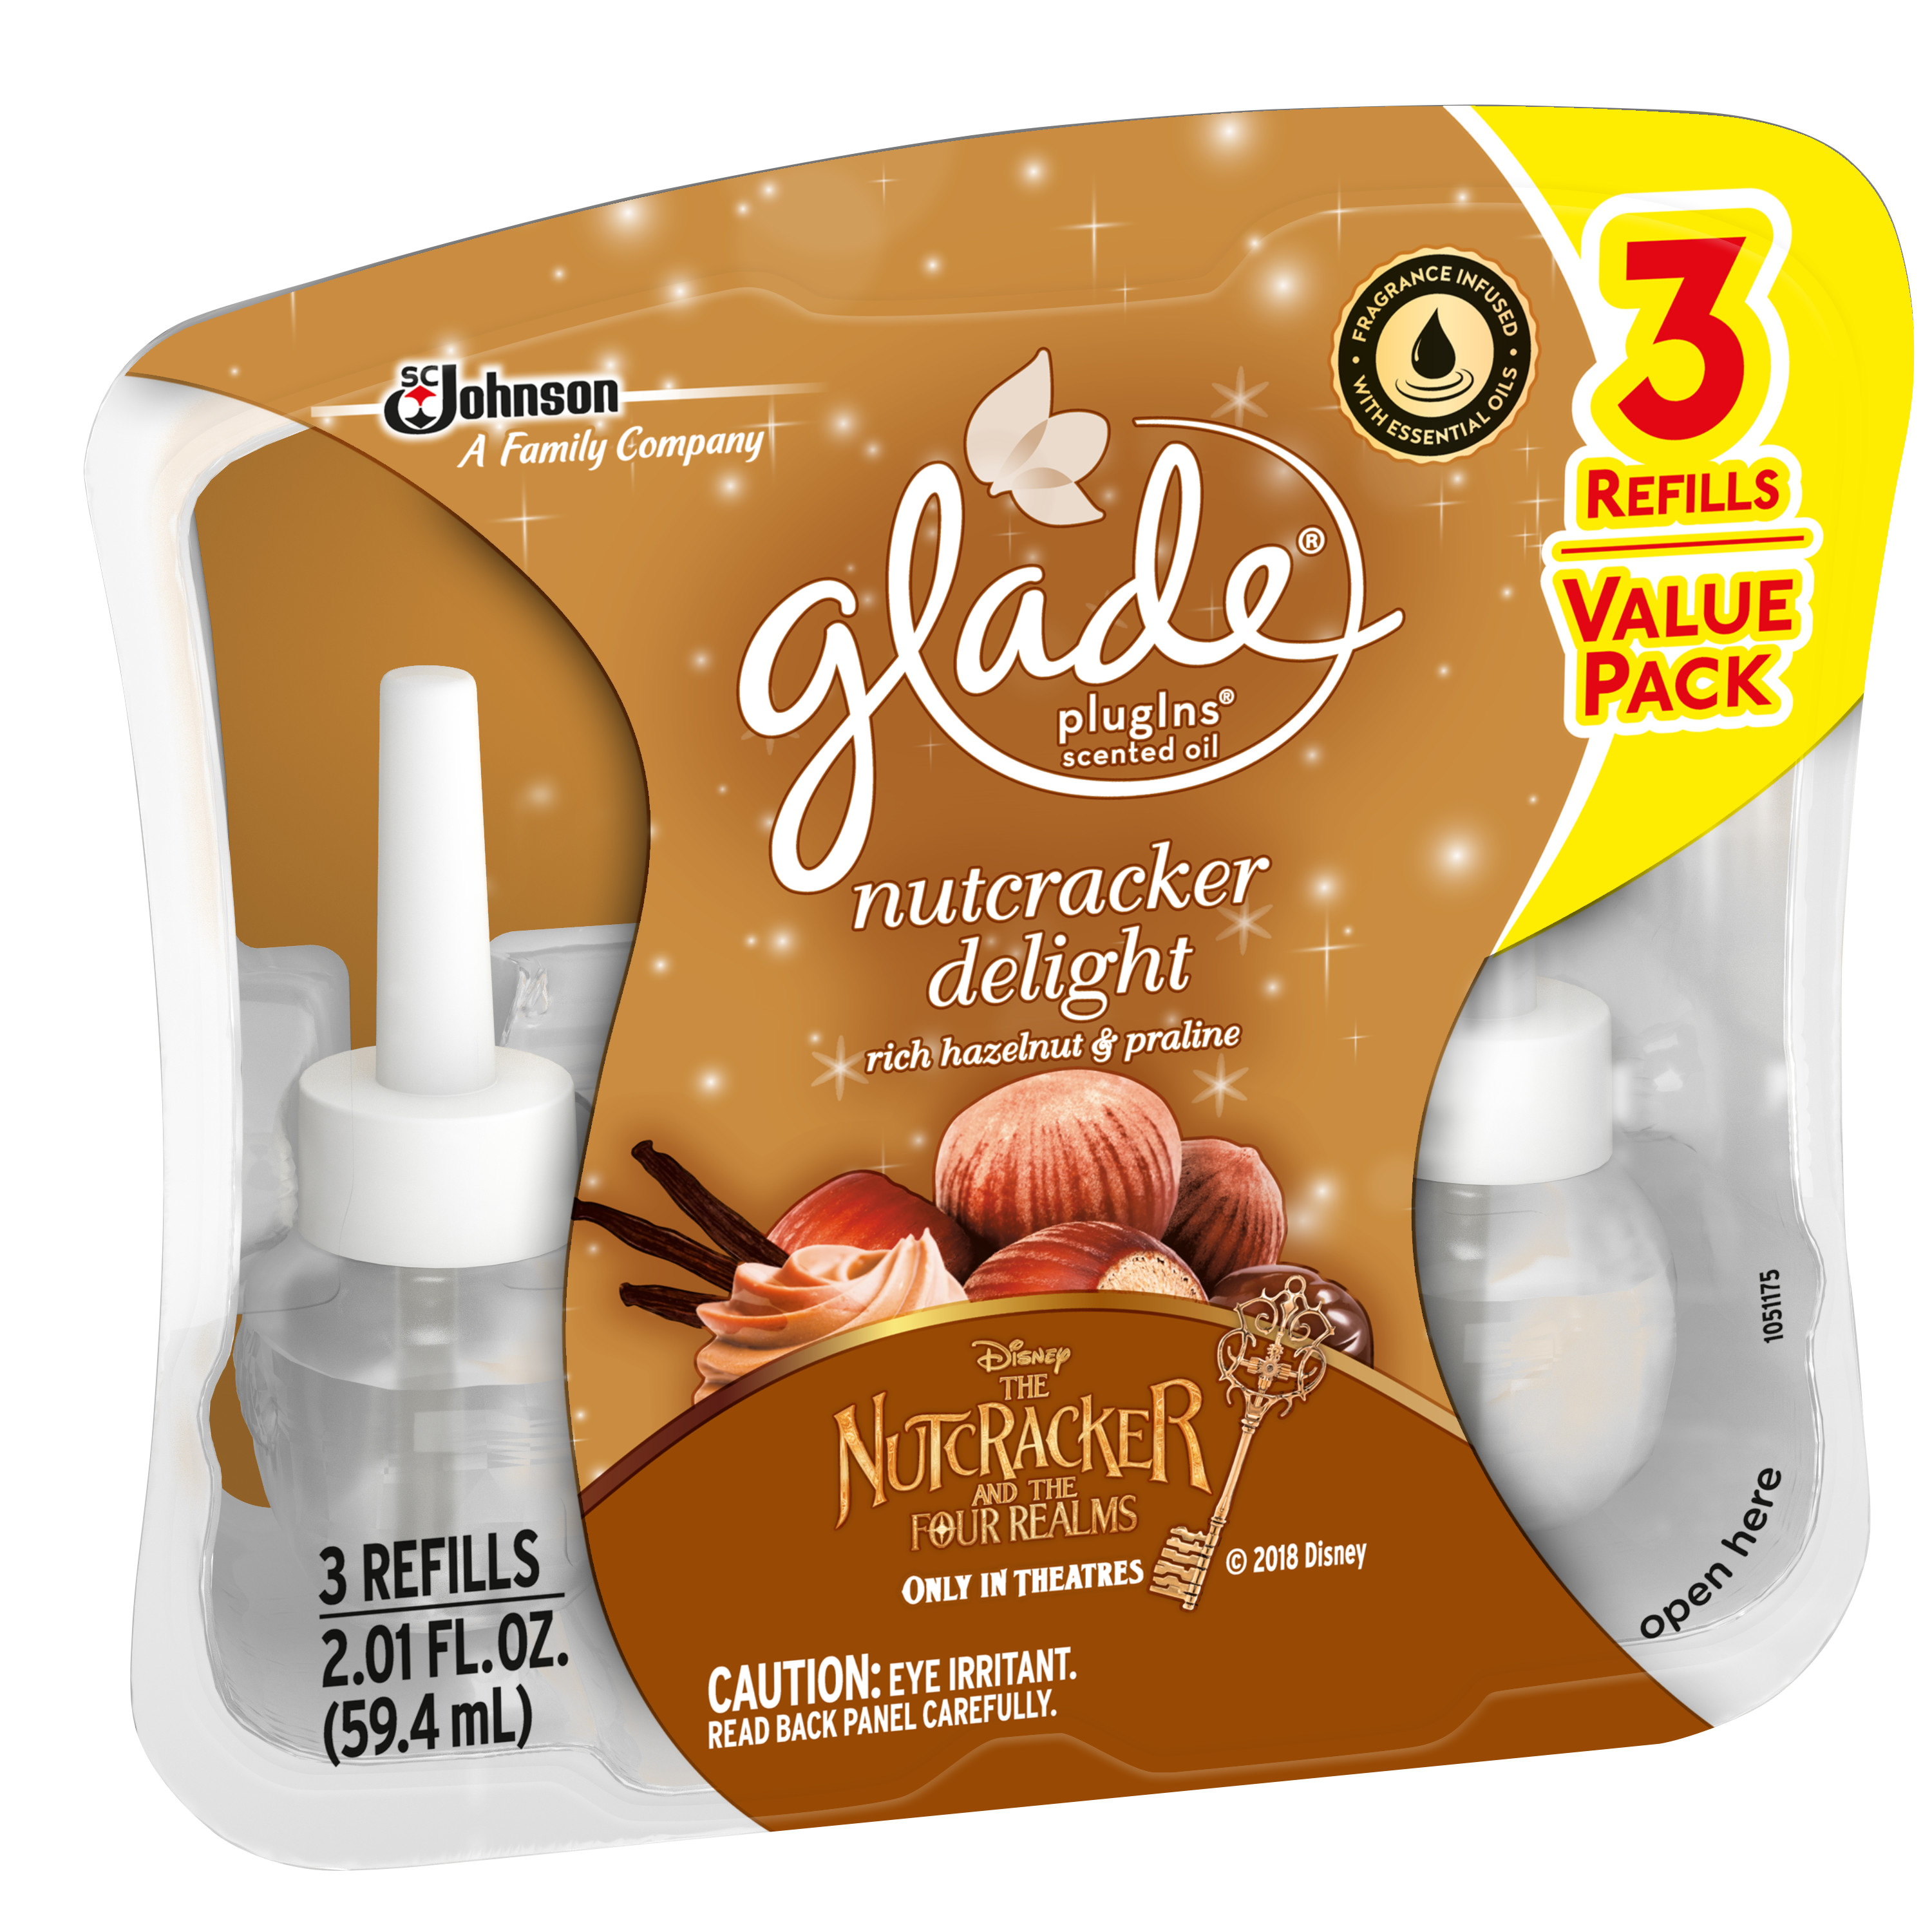 Glade PlugIns Scented Oil Air Freshener Refill, Nutcracker Delight, 3 refills, 2.01 fl oz - image 4 of 7